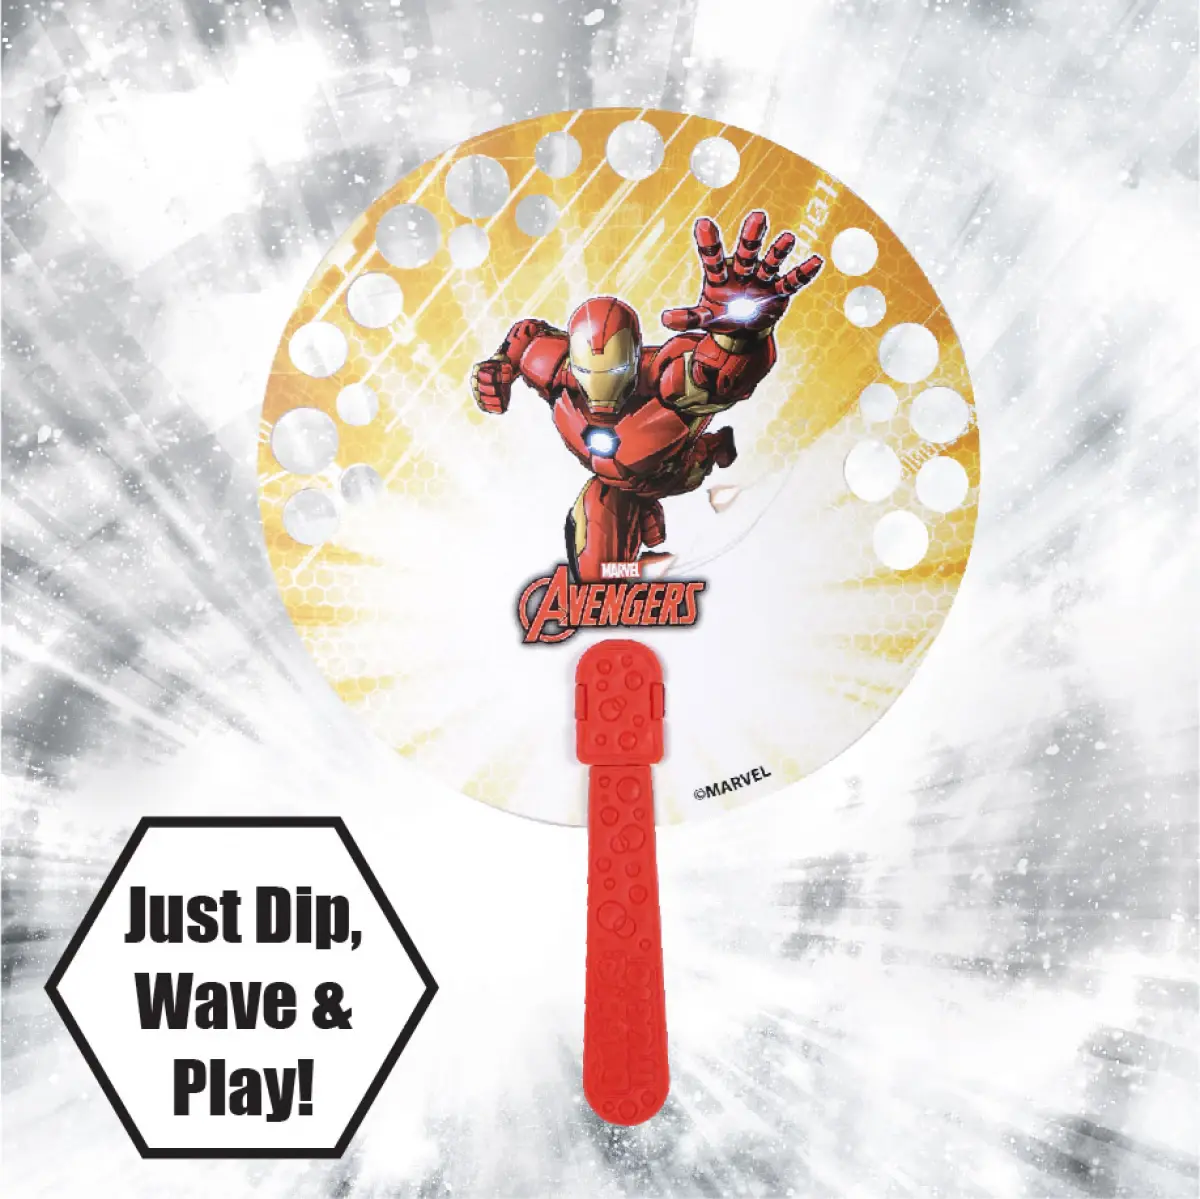 Bubble Magic Fan Bubs Iron Man Theme Bubble Solution For Kids of Age 3Y+, Multicolour